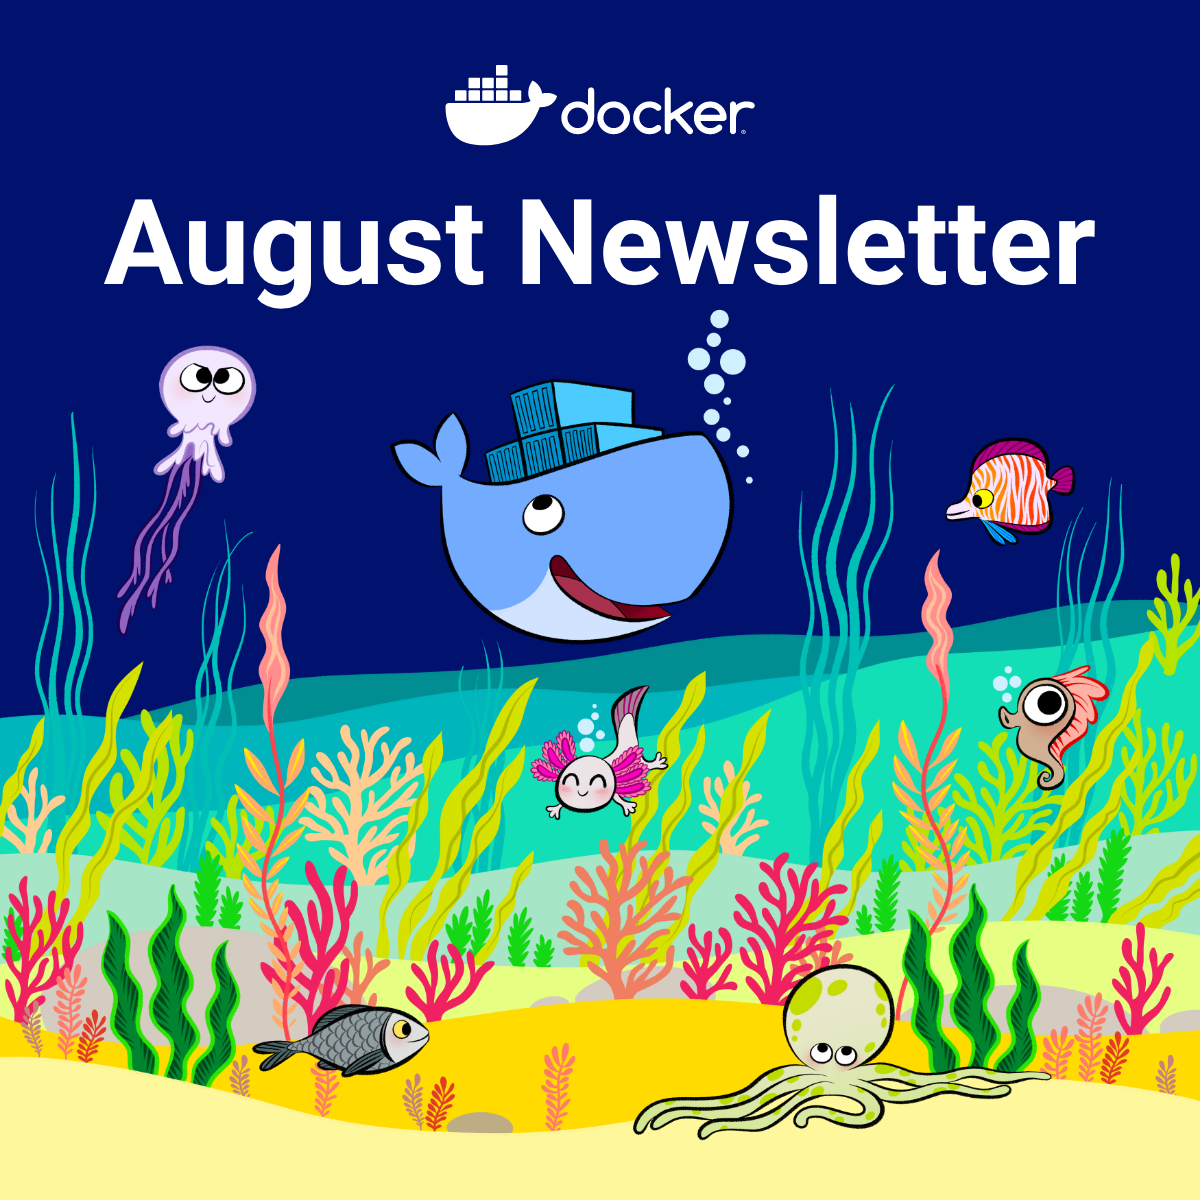 August newsletter featured